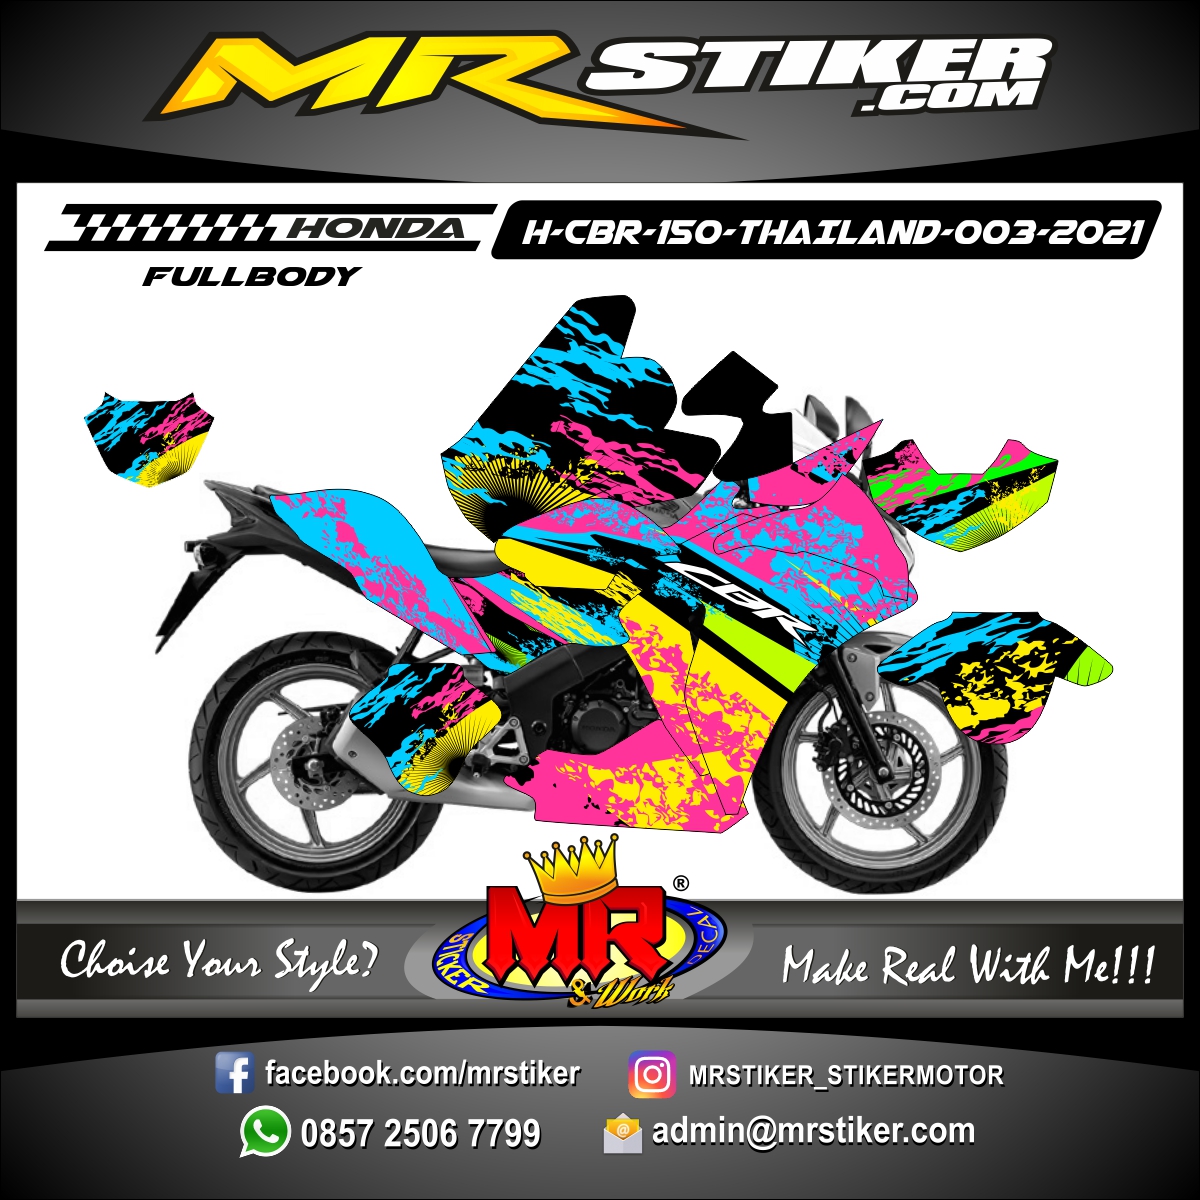 Stiker motor decal Honda CBR 150 THAILAND Splater ColorFul FULLBODY